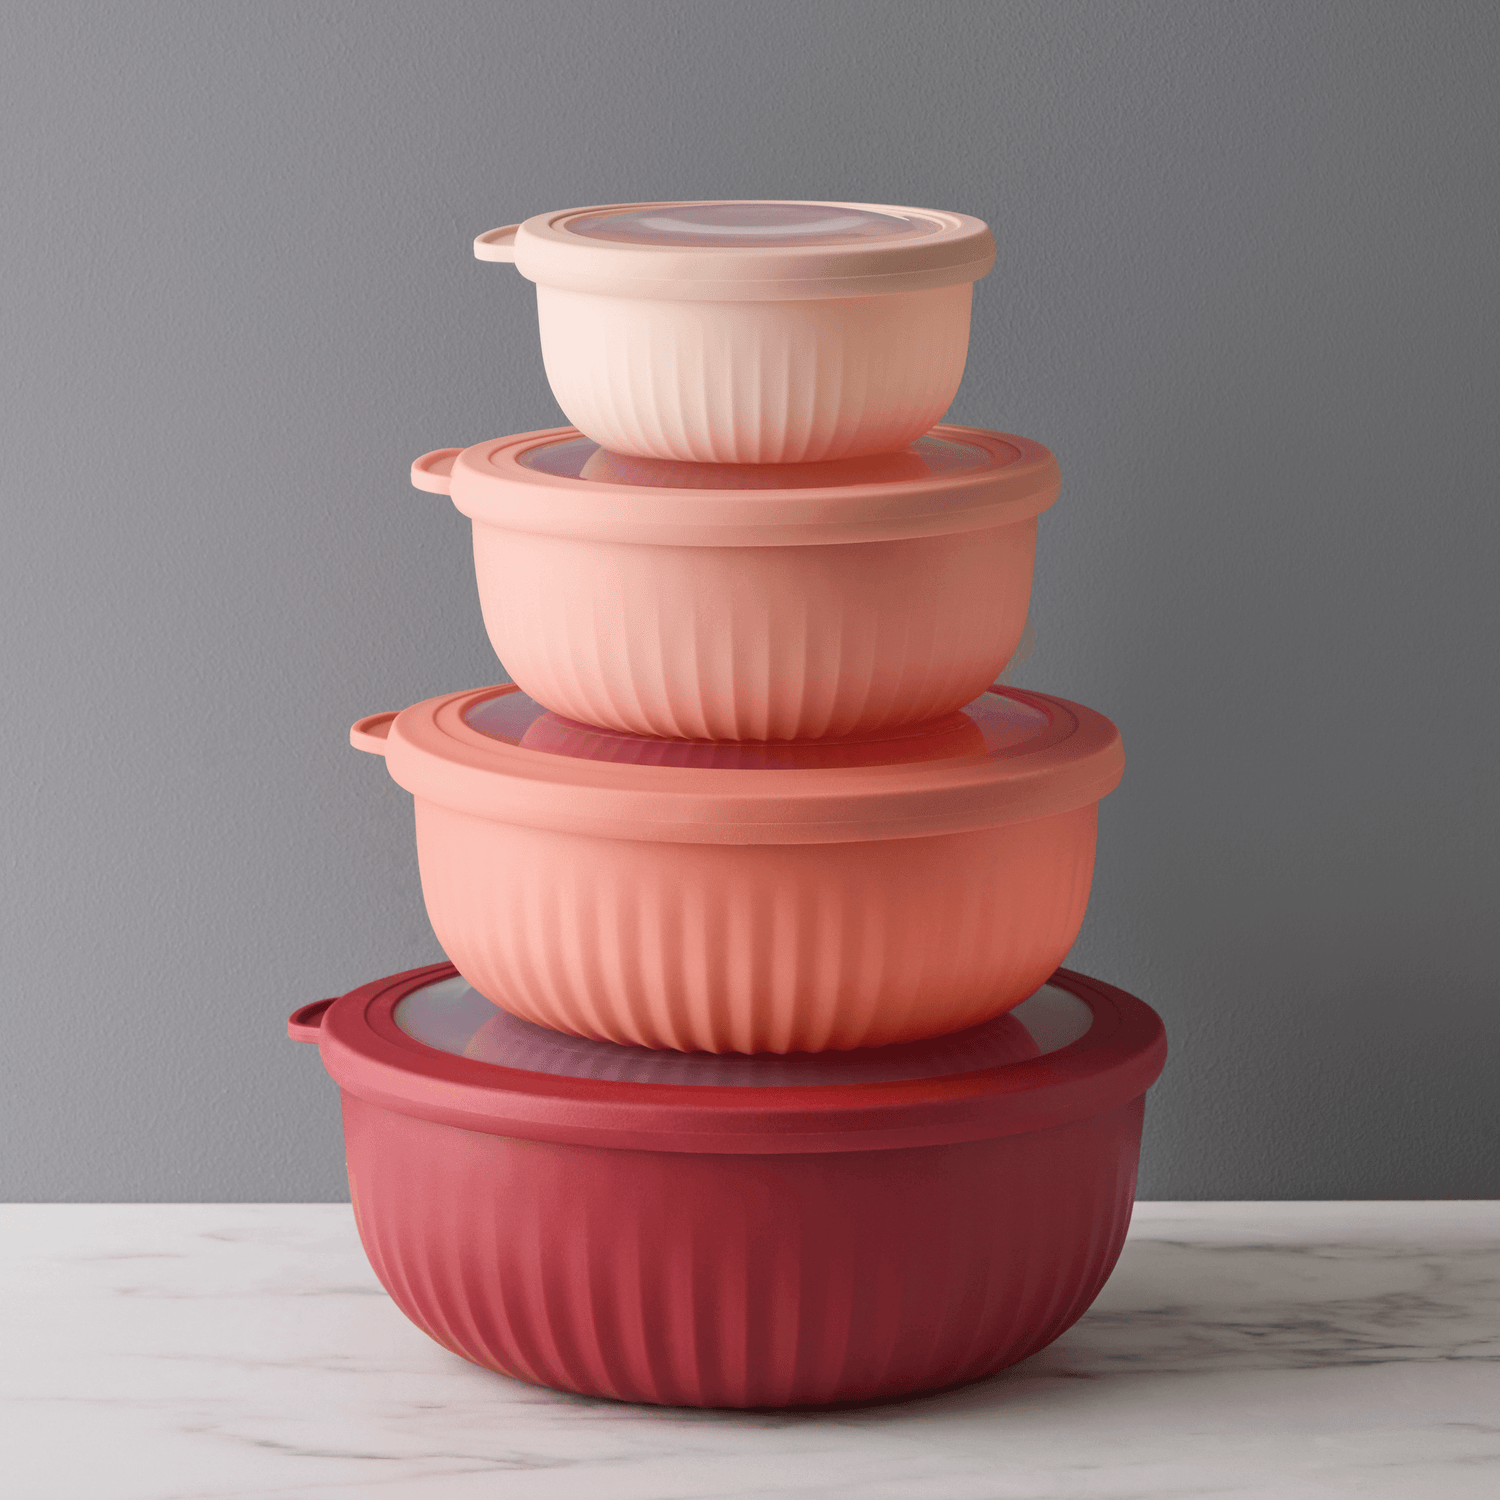 Cook with Color Plastic Prep Bowls - Small Bowls with Lids, 8 Piece Nesting Bowls Set Includes 4 Prep Bowls and 4 Lids (Ombre Pale Blue)